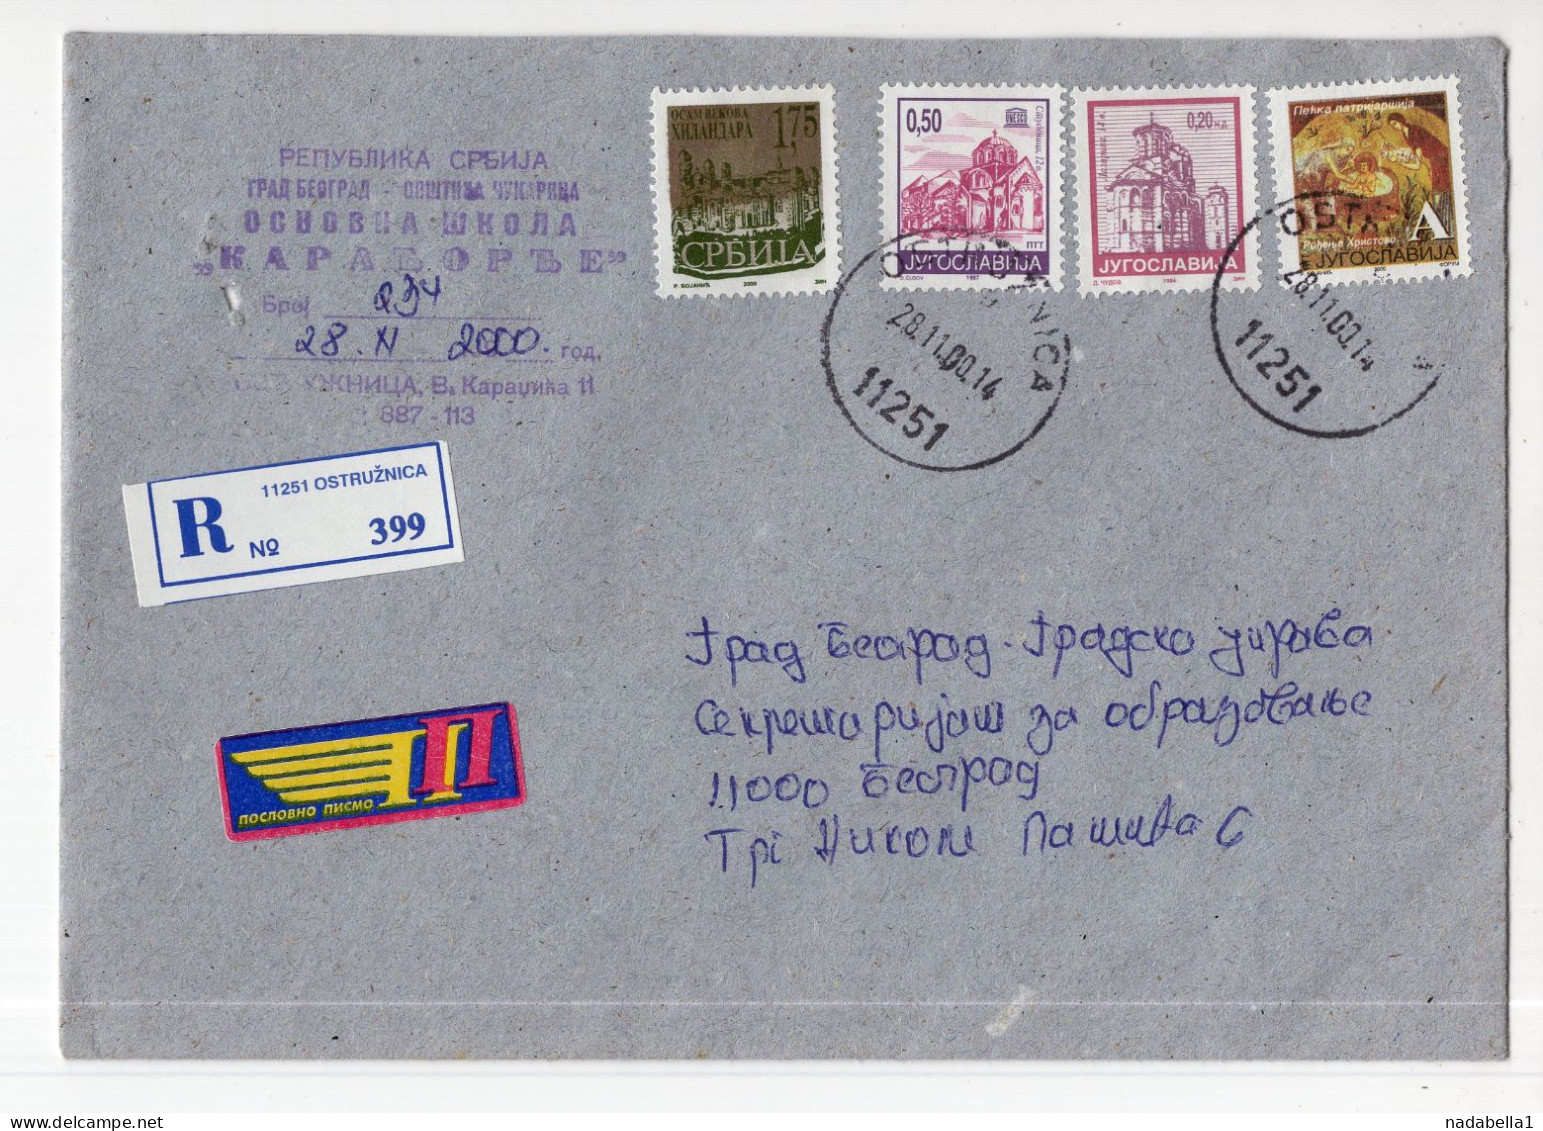 2000. YUGOSLAVIA,SERBIA,OSTRUZNICA,COVER,4 SERBIAN MONASTERY STAMPS - Storia Postale